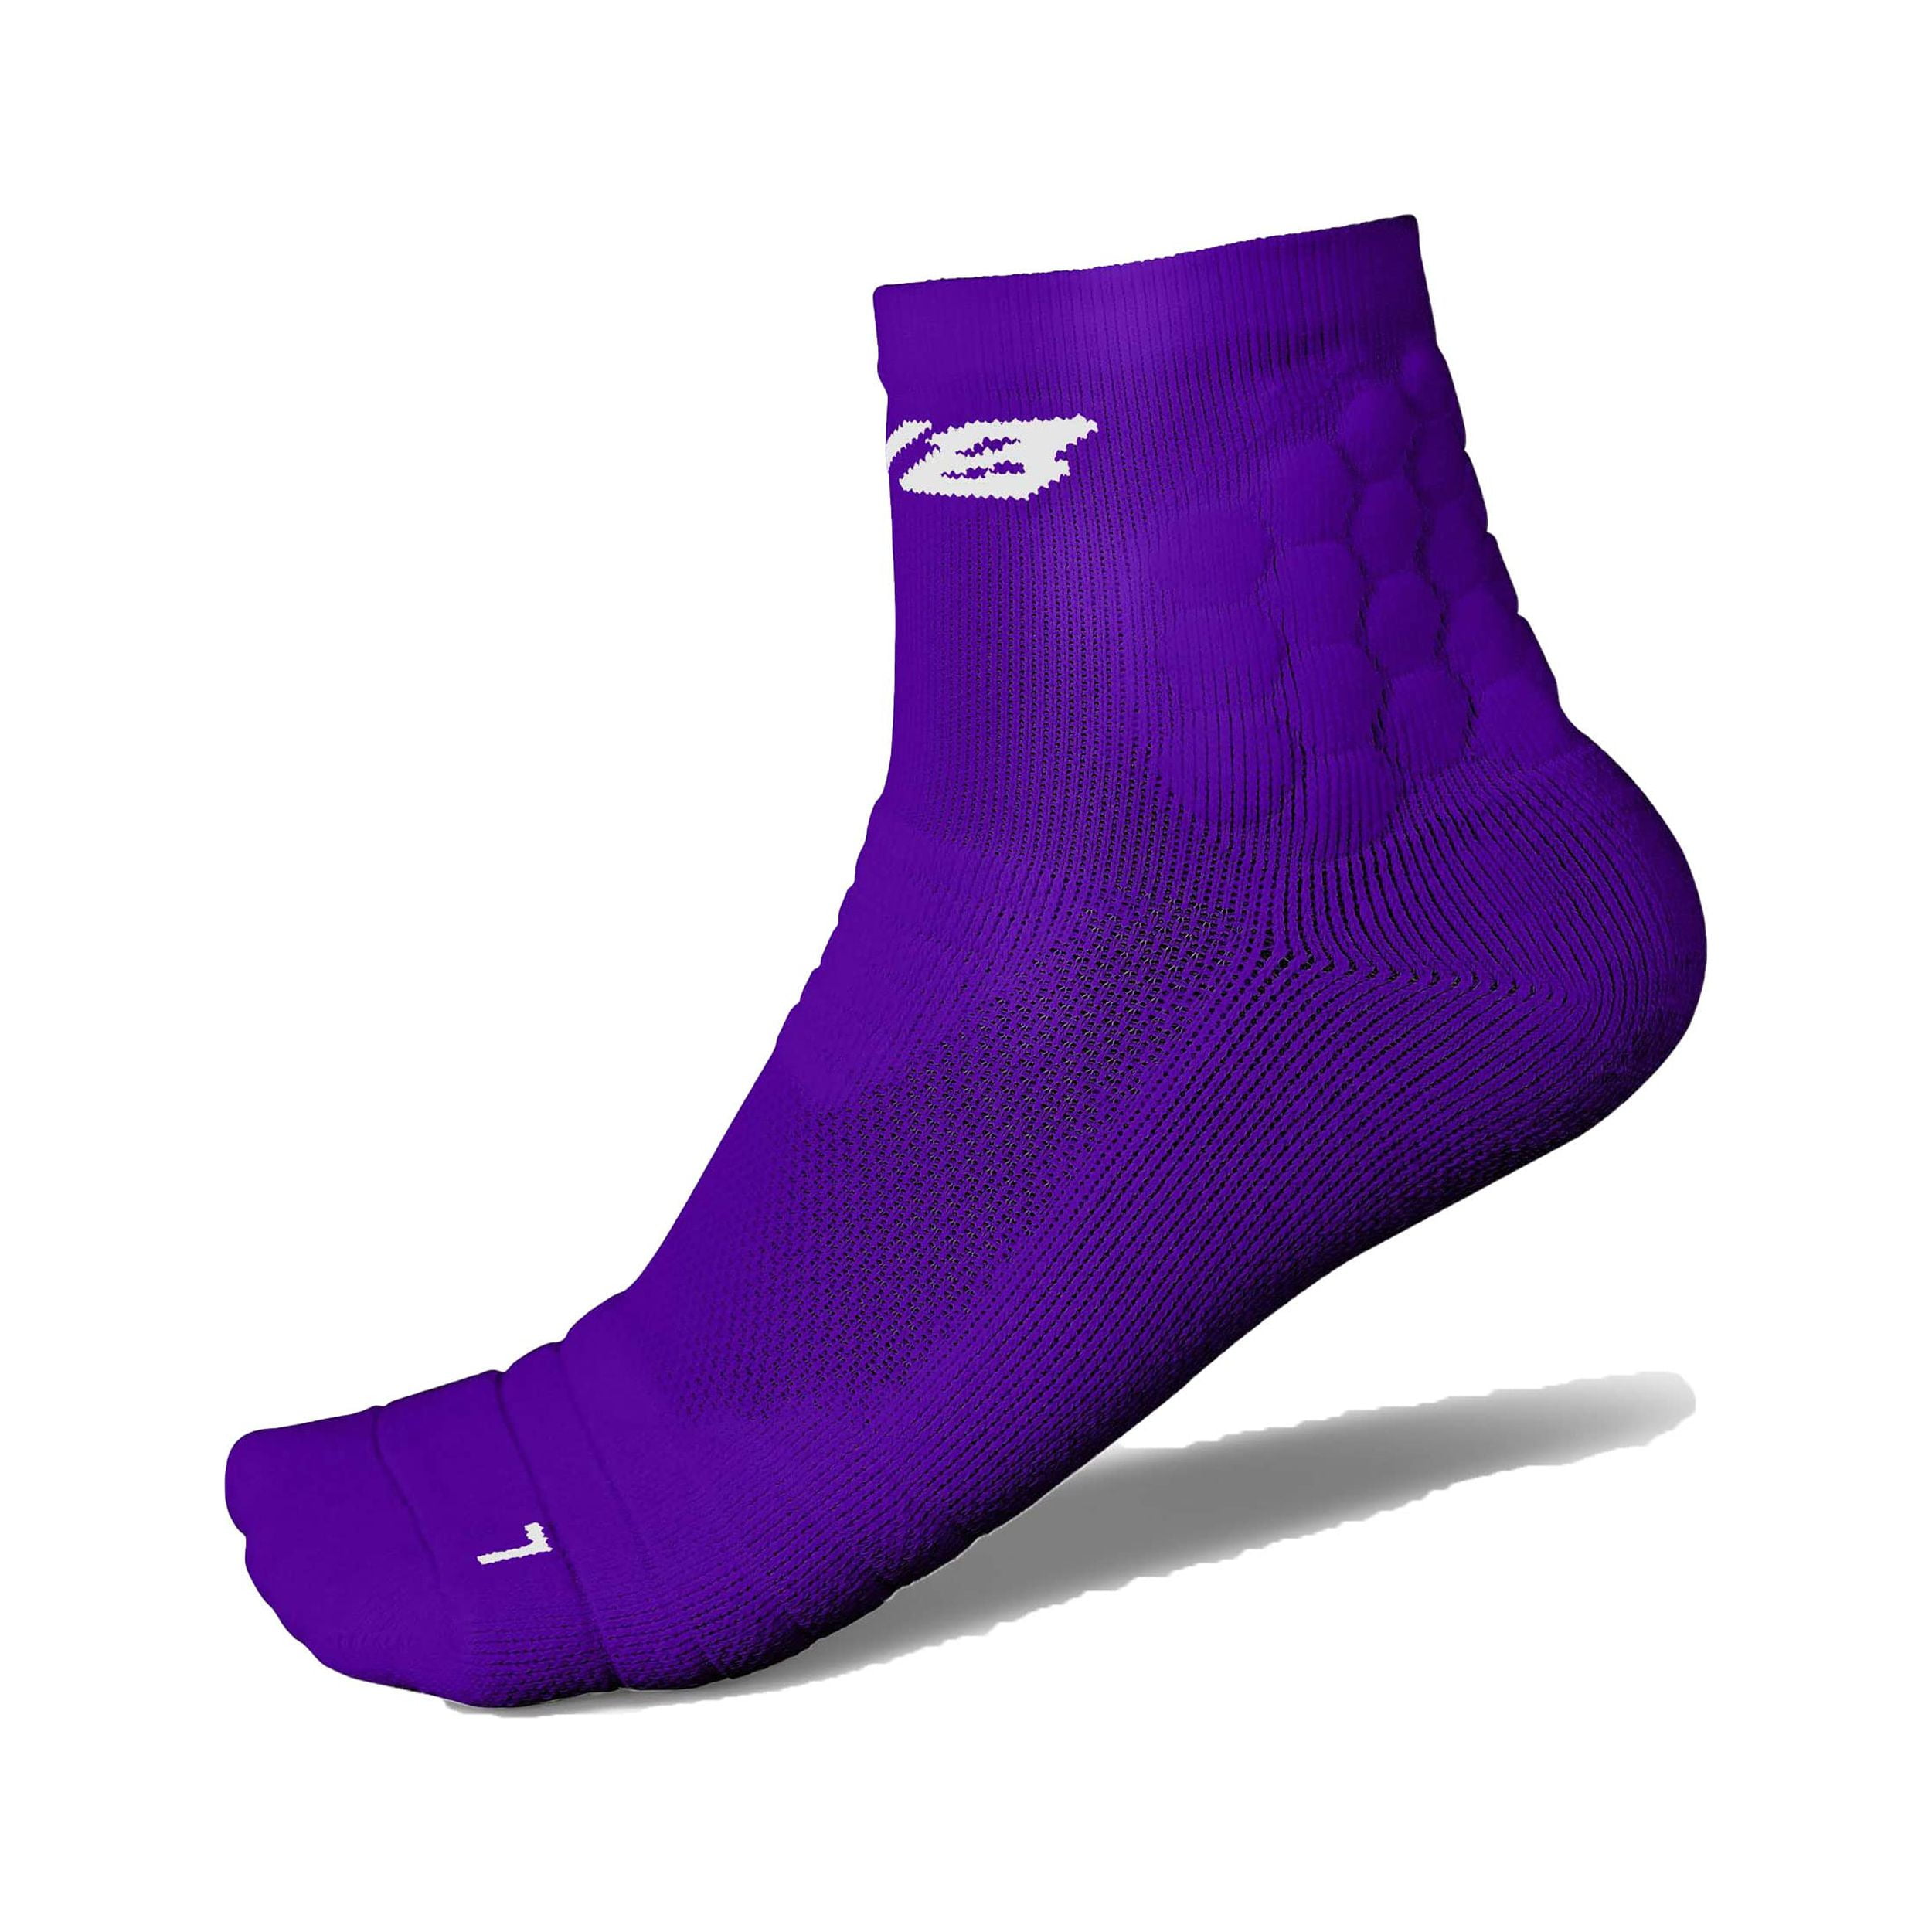 Pure Athlete Grip Socks Soccer - Non Slip Padded Gripper Crew Sock  Accessories (X-Large, Black-Grey) 